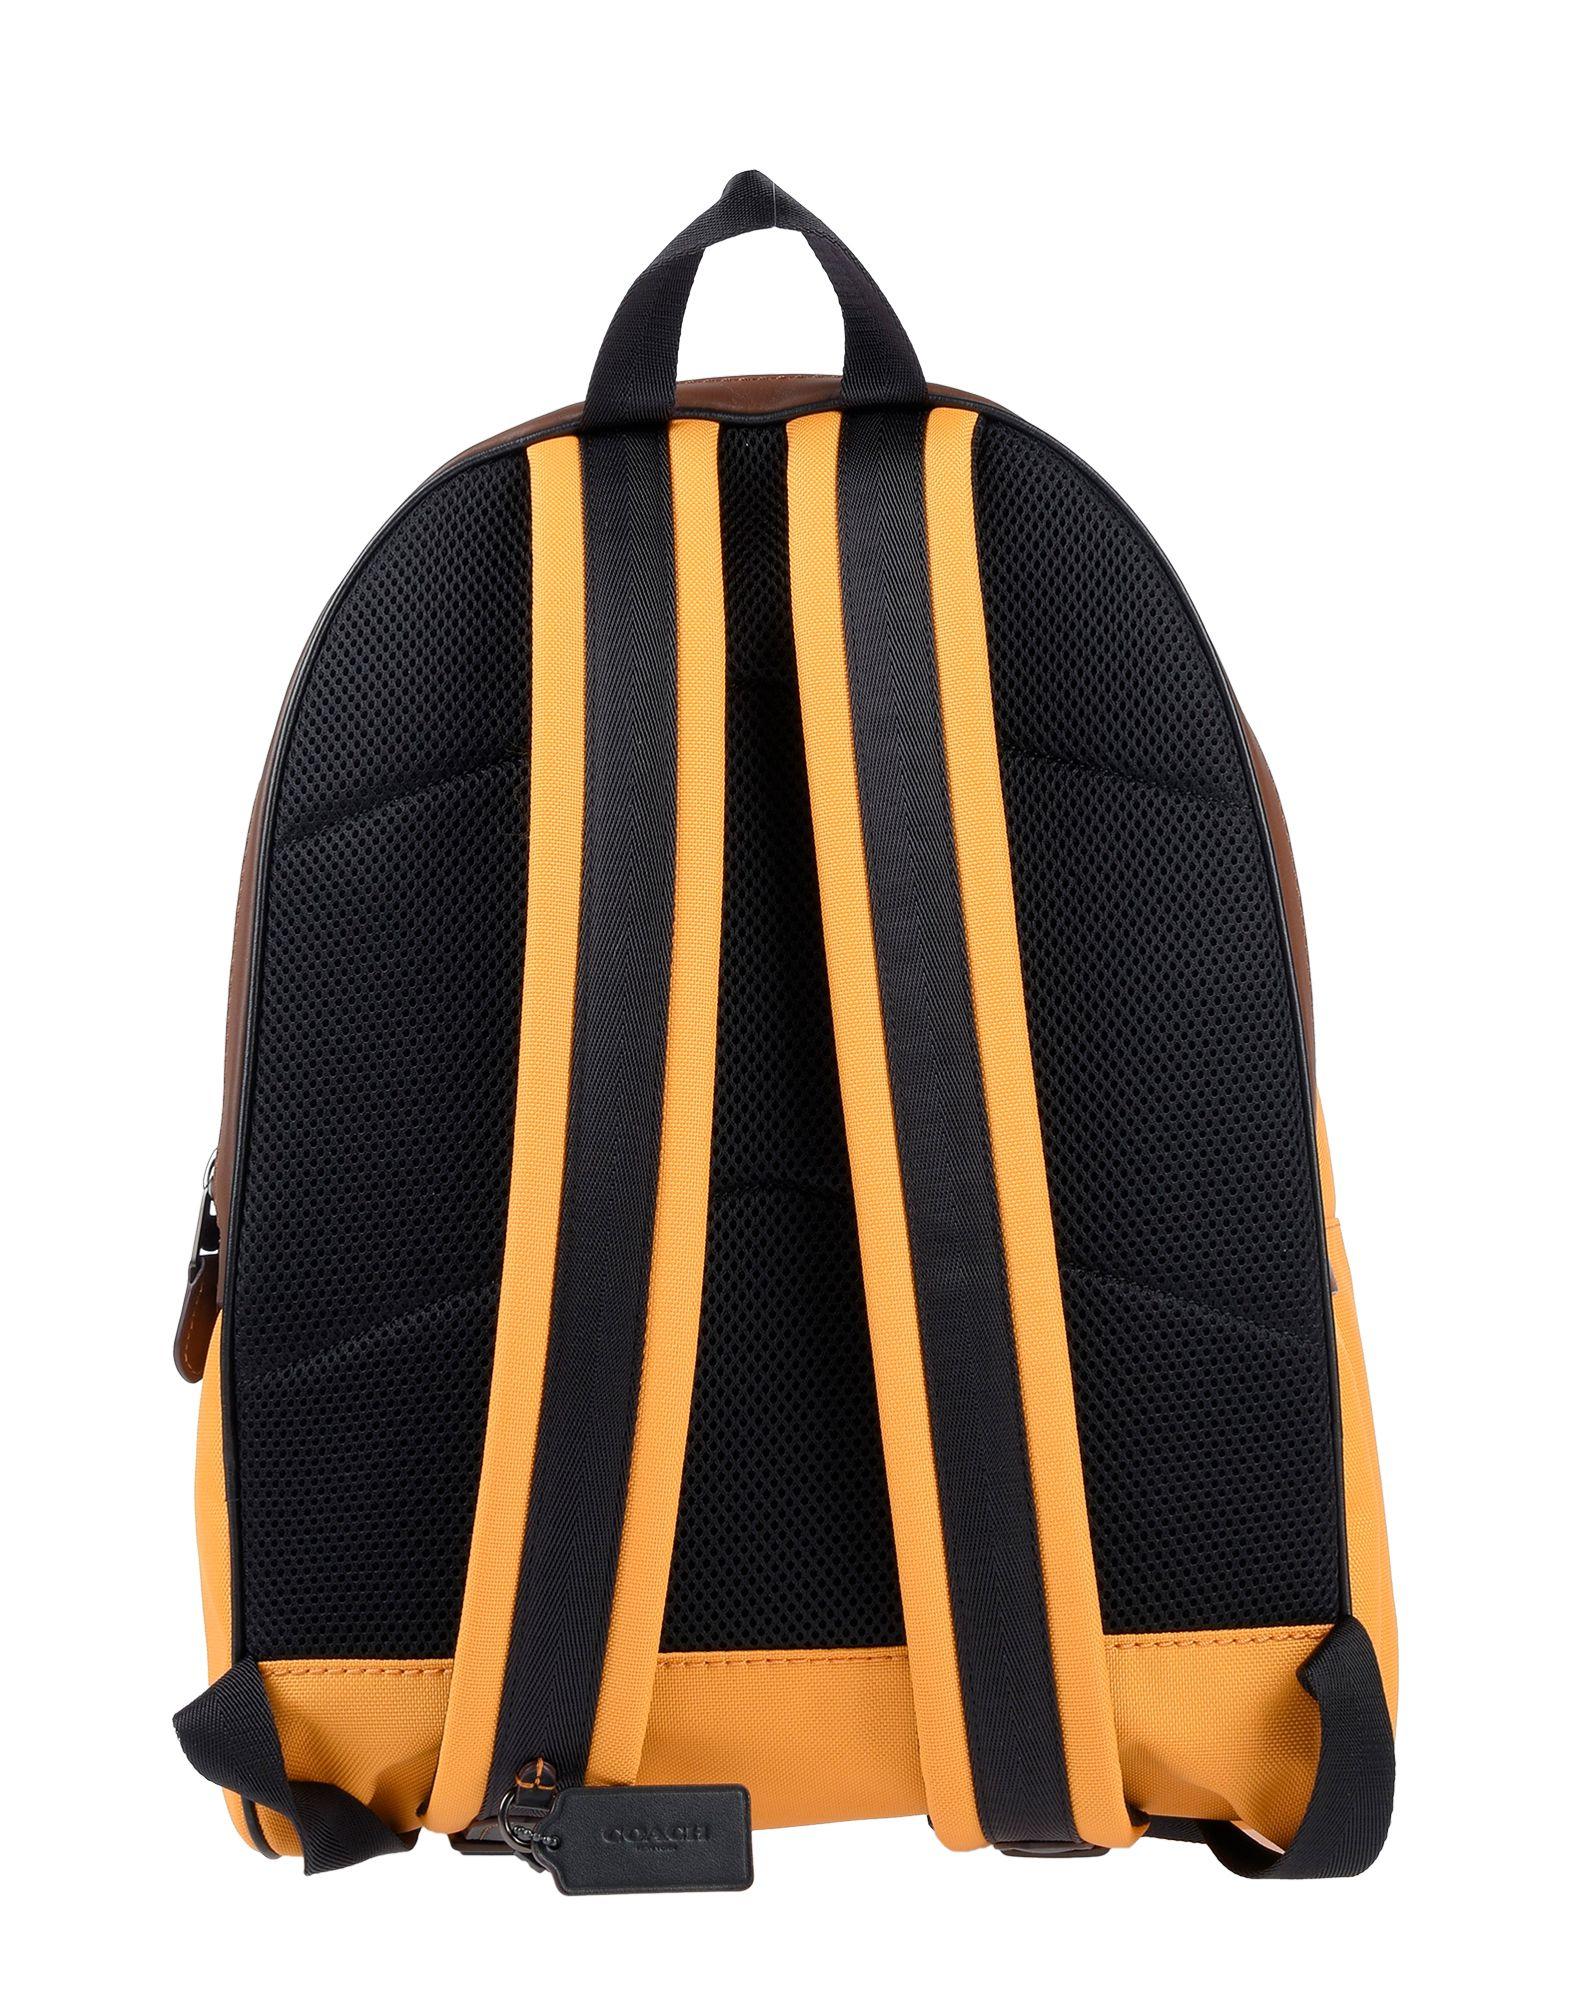 COACH Leather Backpacks & Fanny Packs in Orange for Men - Lyst